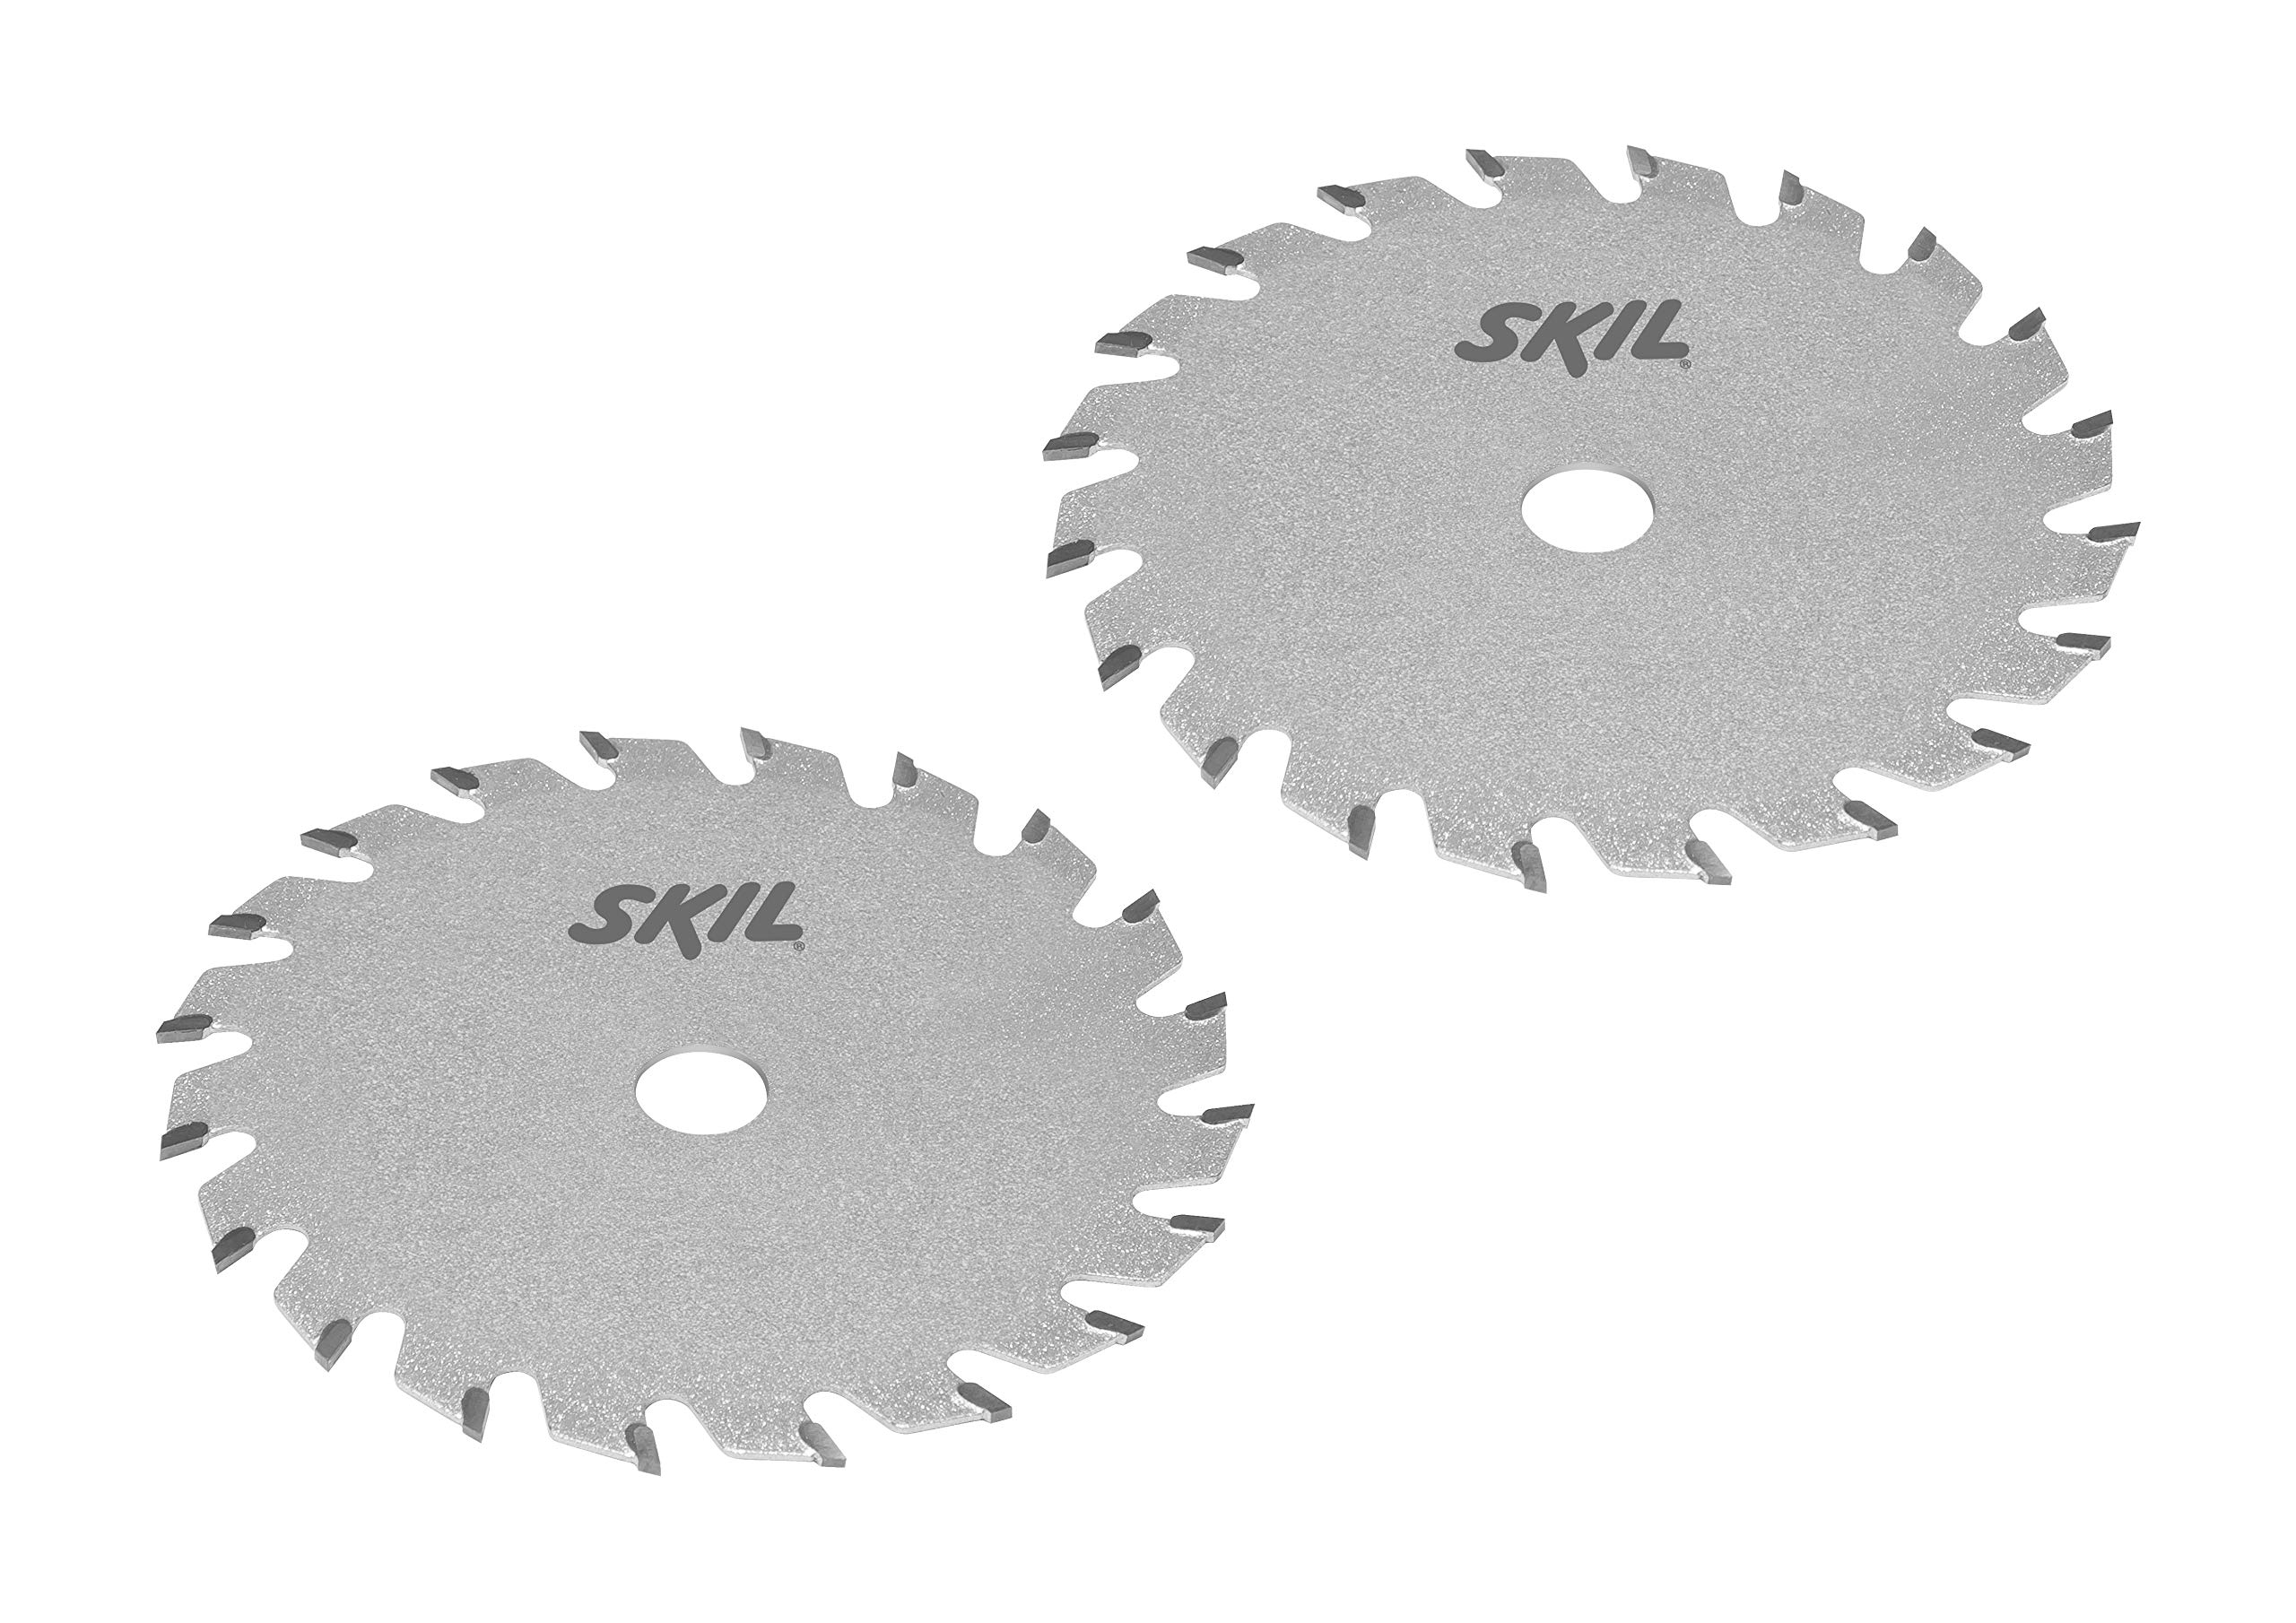 Skil Sägeblatt-Set 2-teilig (hartmetallbestückt, ø 85 mm, Werkzeugaufnahme ø 10 mm, für Handkreissägen) 2610Z07905, grau